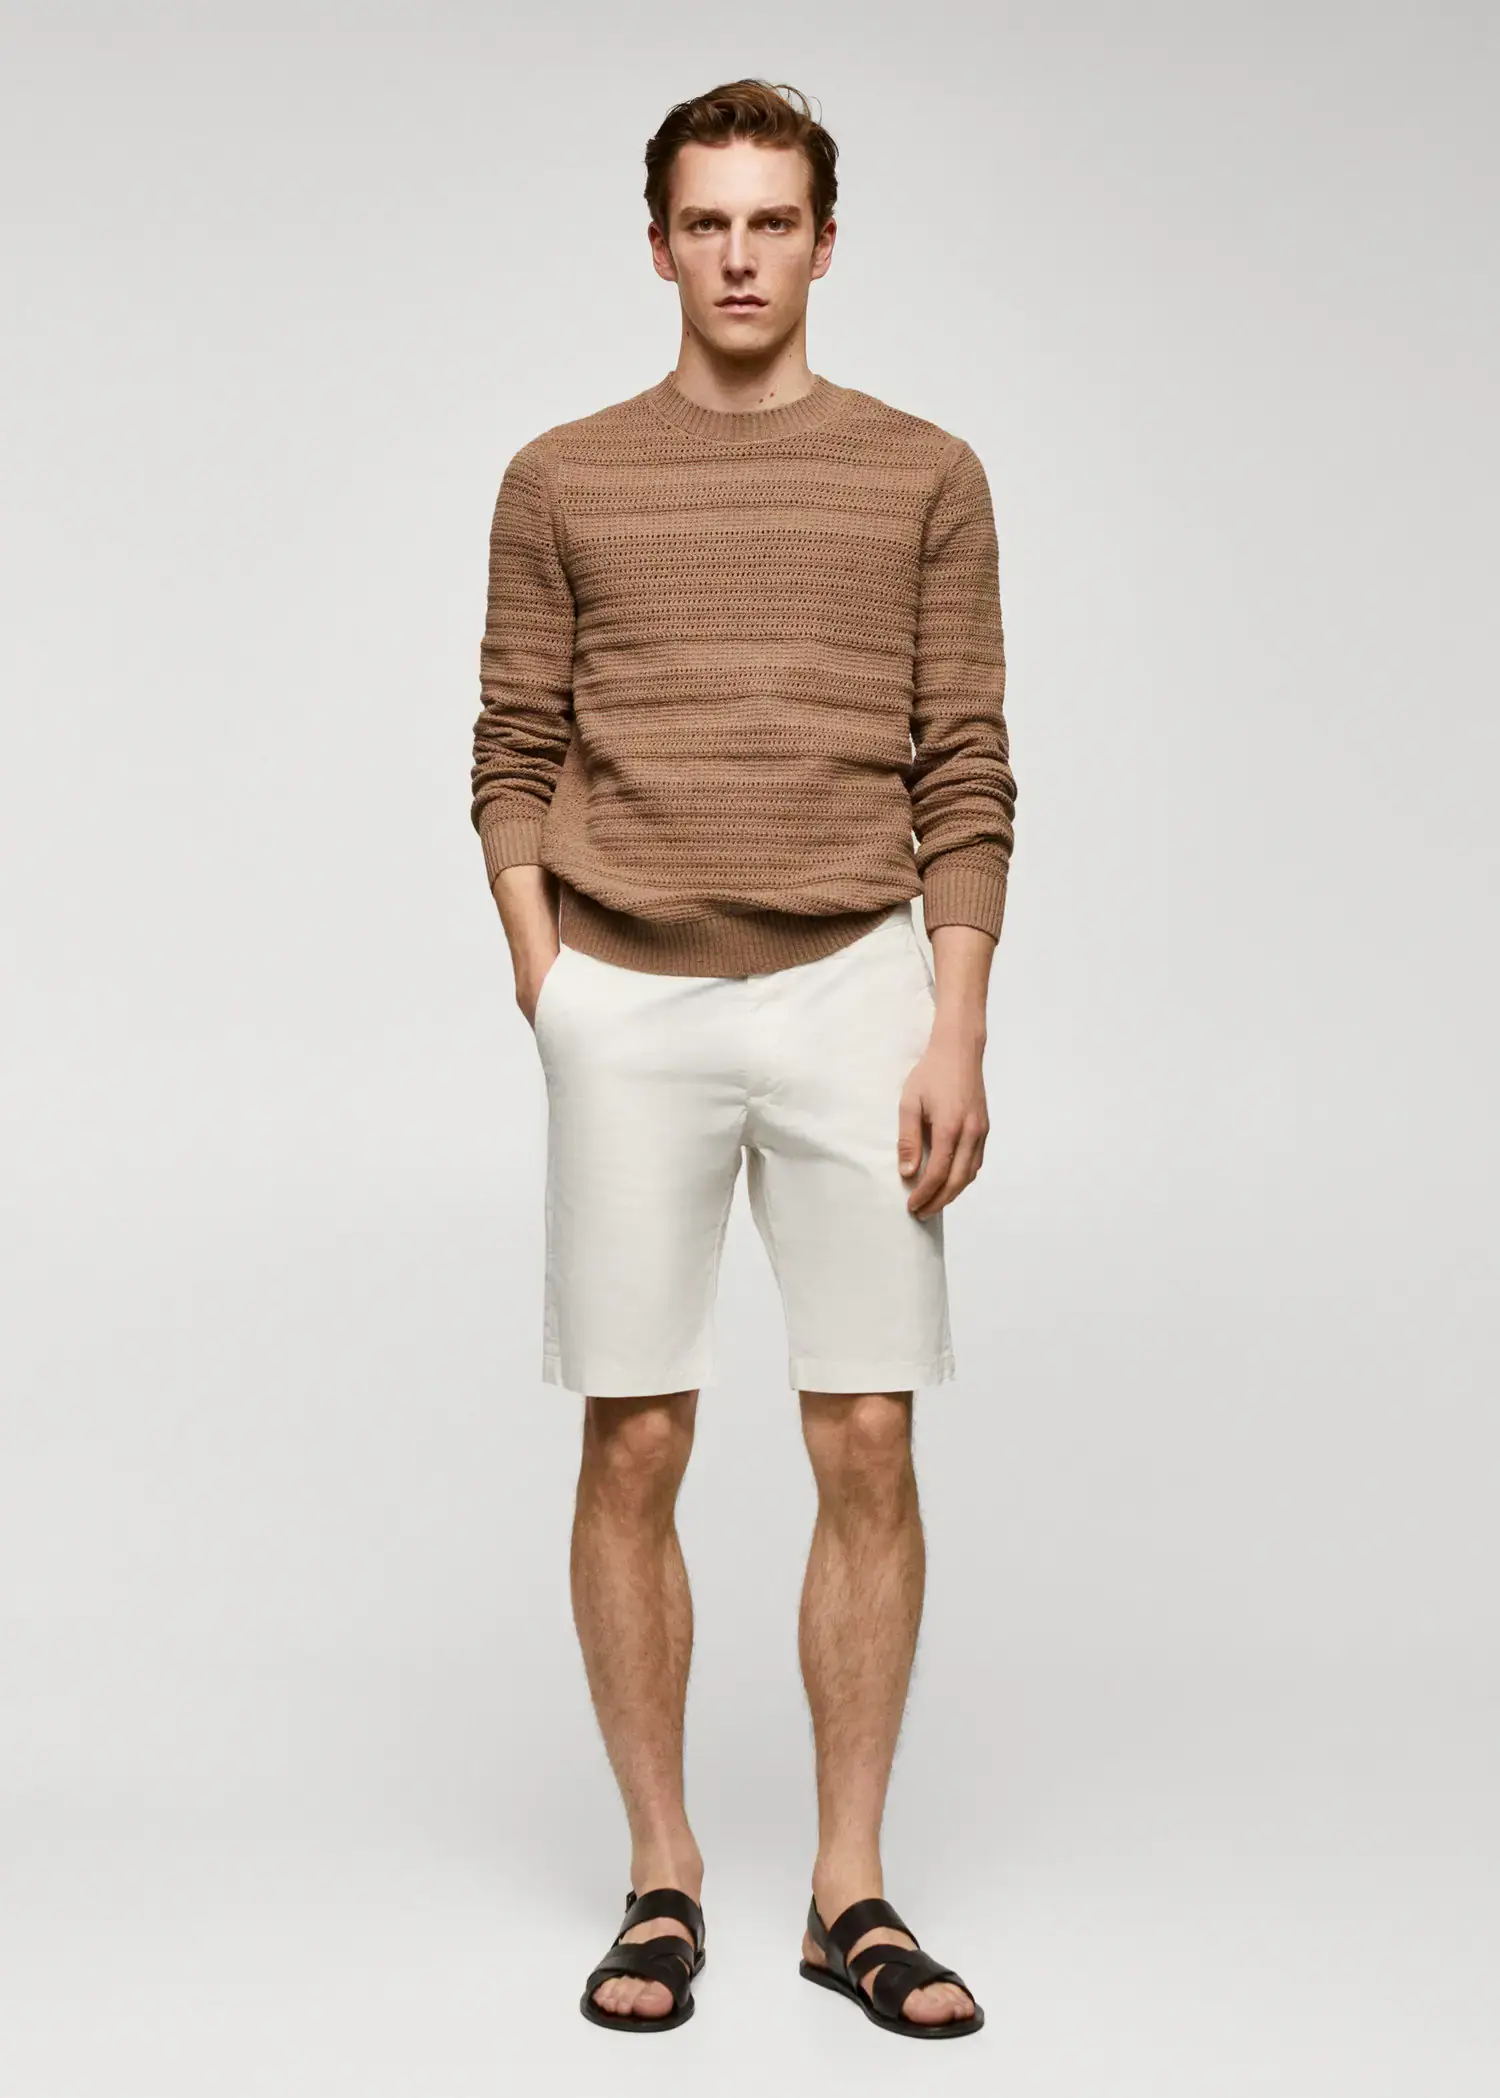 Mango Chino Bermuda shorts. a man in a tan sweater and white shorts. 